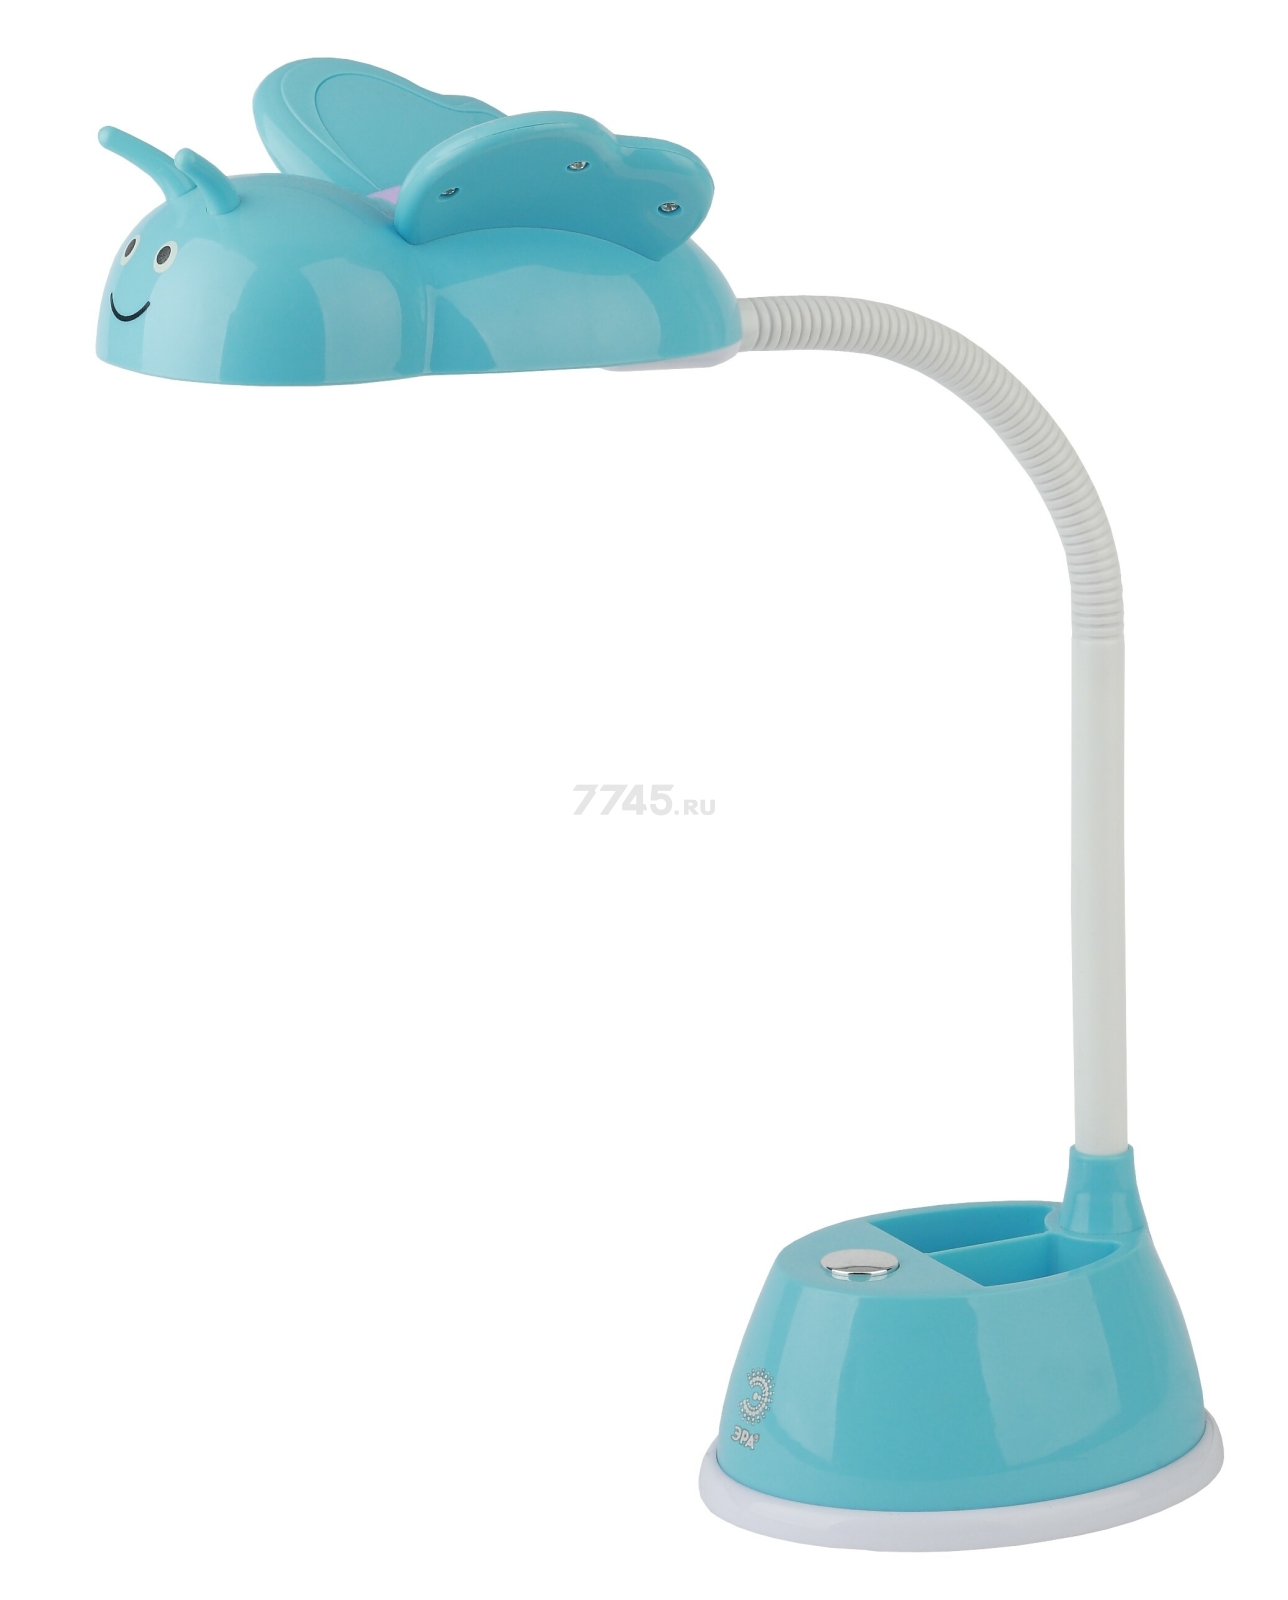 Лампа настольная светодиодная ЭРА NLED-434 6 Вт синяя